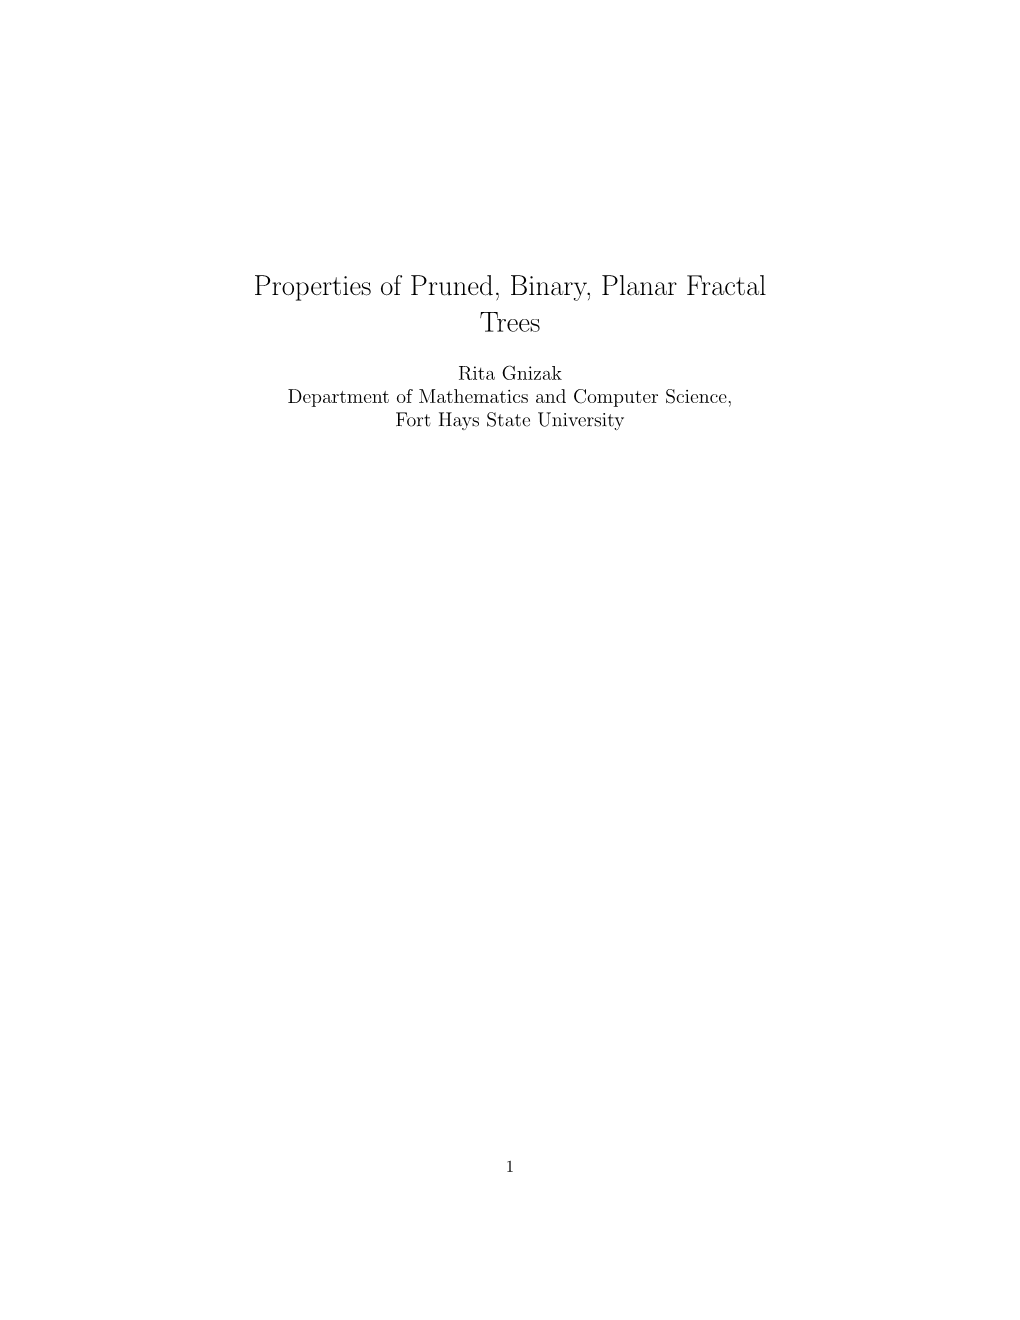 Properties of Pruned, Binary, Planar Fractal Trees